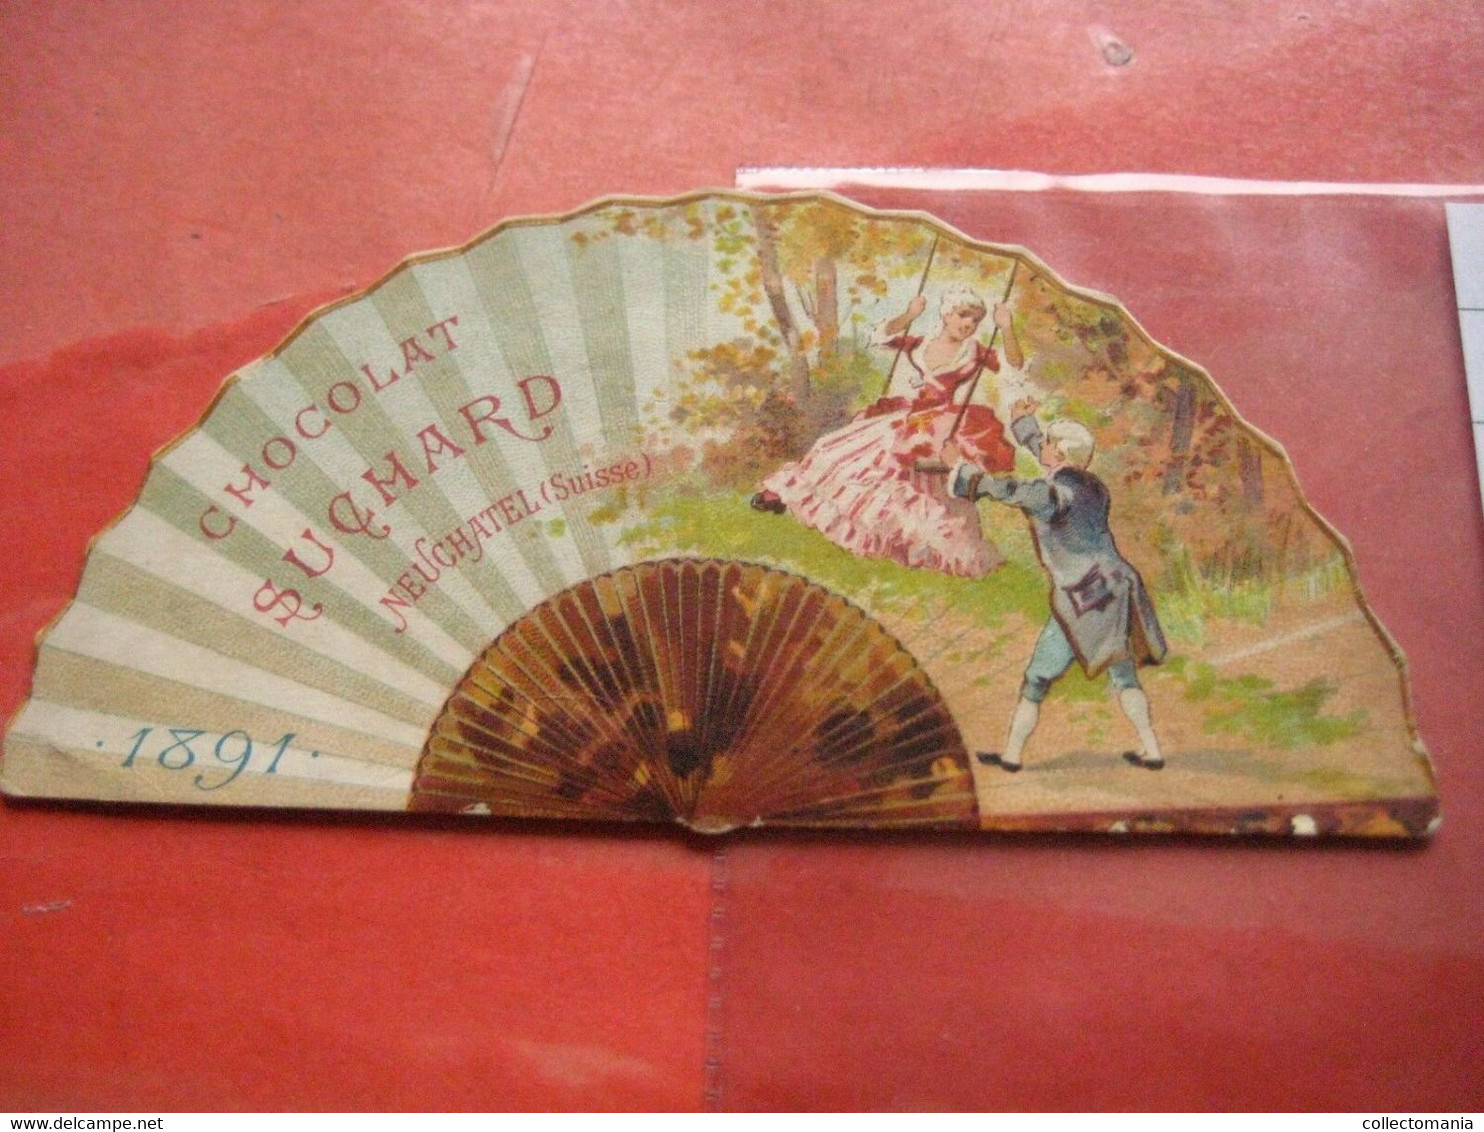 4 Cards Die Cut Chocolate  Uchard  Set Part IV  Set Nr 2  Fan Shaped Calendars 1891 1891 SUCHARD 10,8 X 5,4 Cm - Suchard